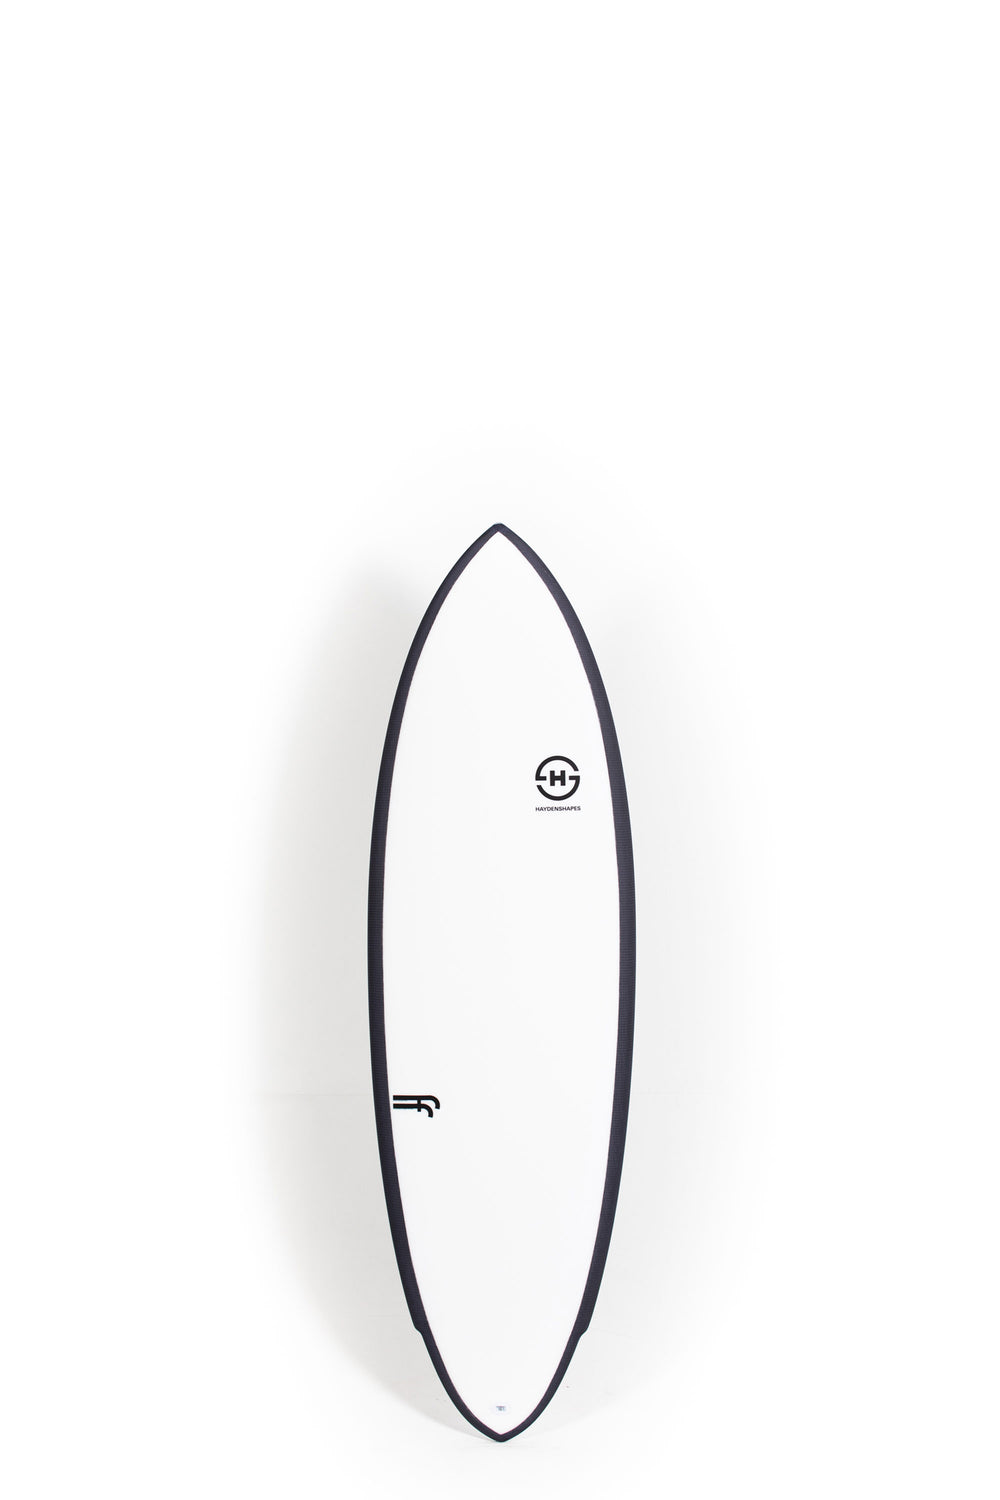 Pukas Surf Shop - HaydenShapes Surfboard - HYPTO KRYPTO TWIN PIN - 5'8